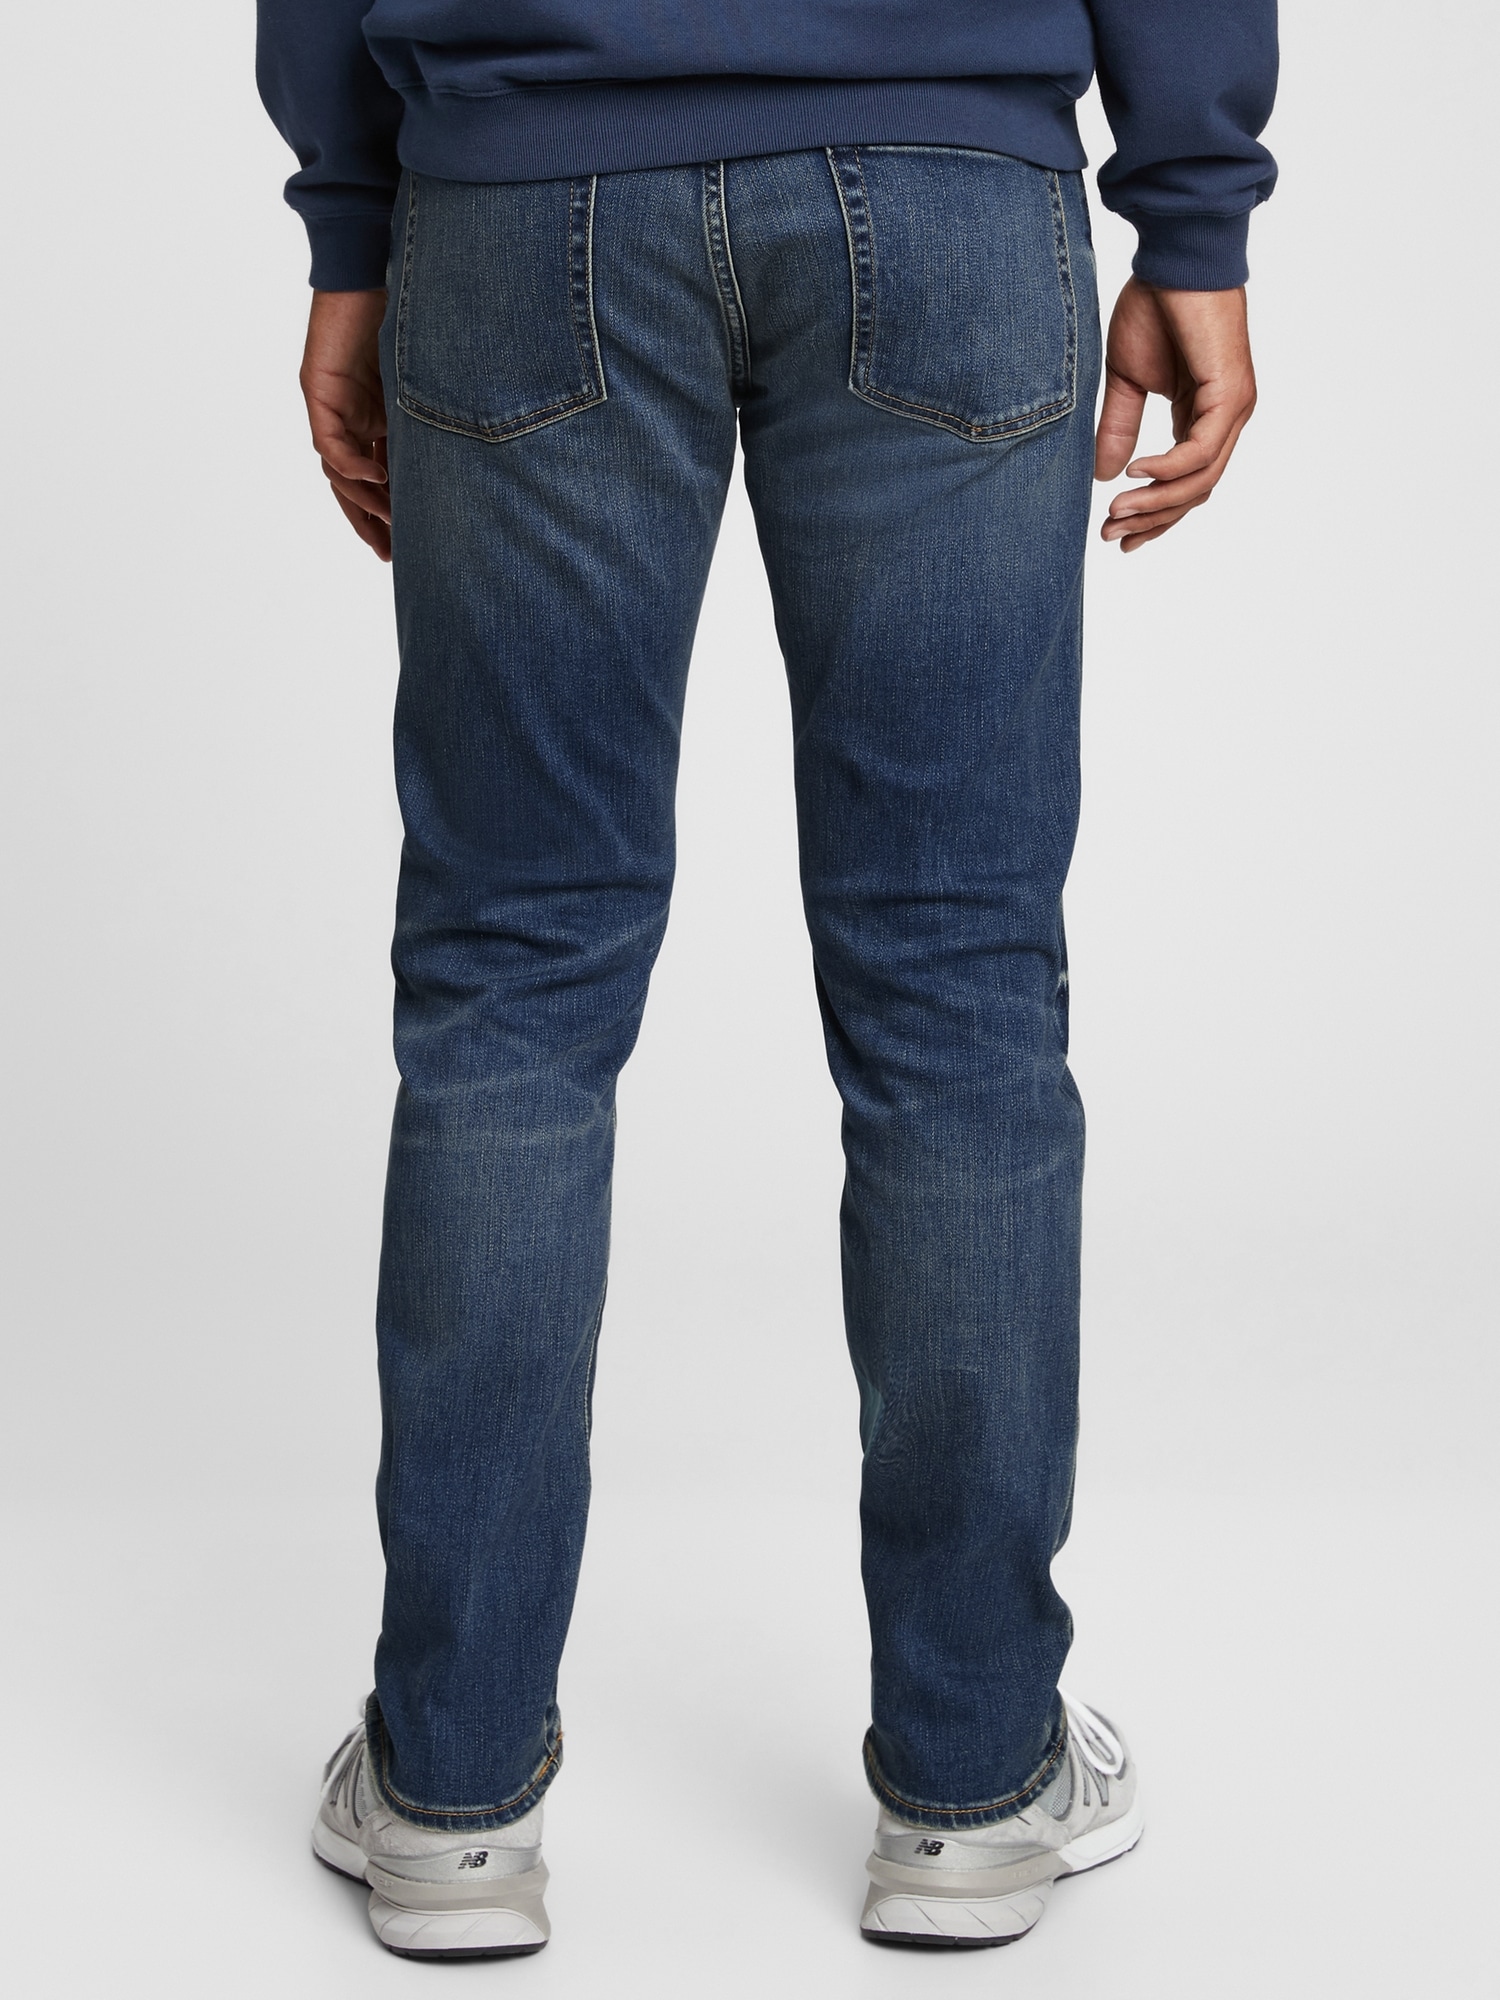 GAP Men's Soft Wear Stretch Slim Fit Denim Jeans, Midnight Wash